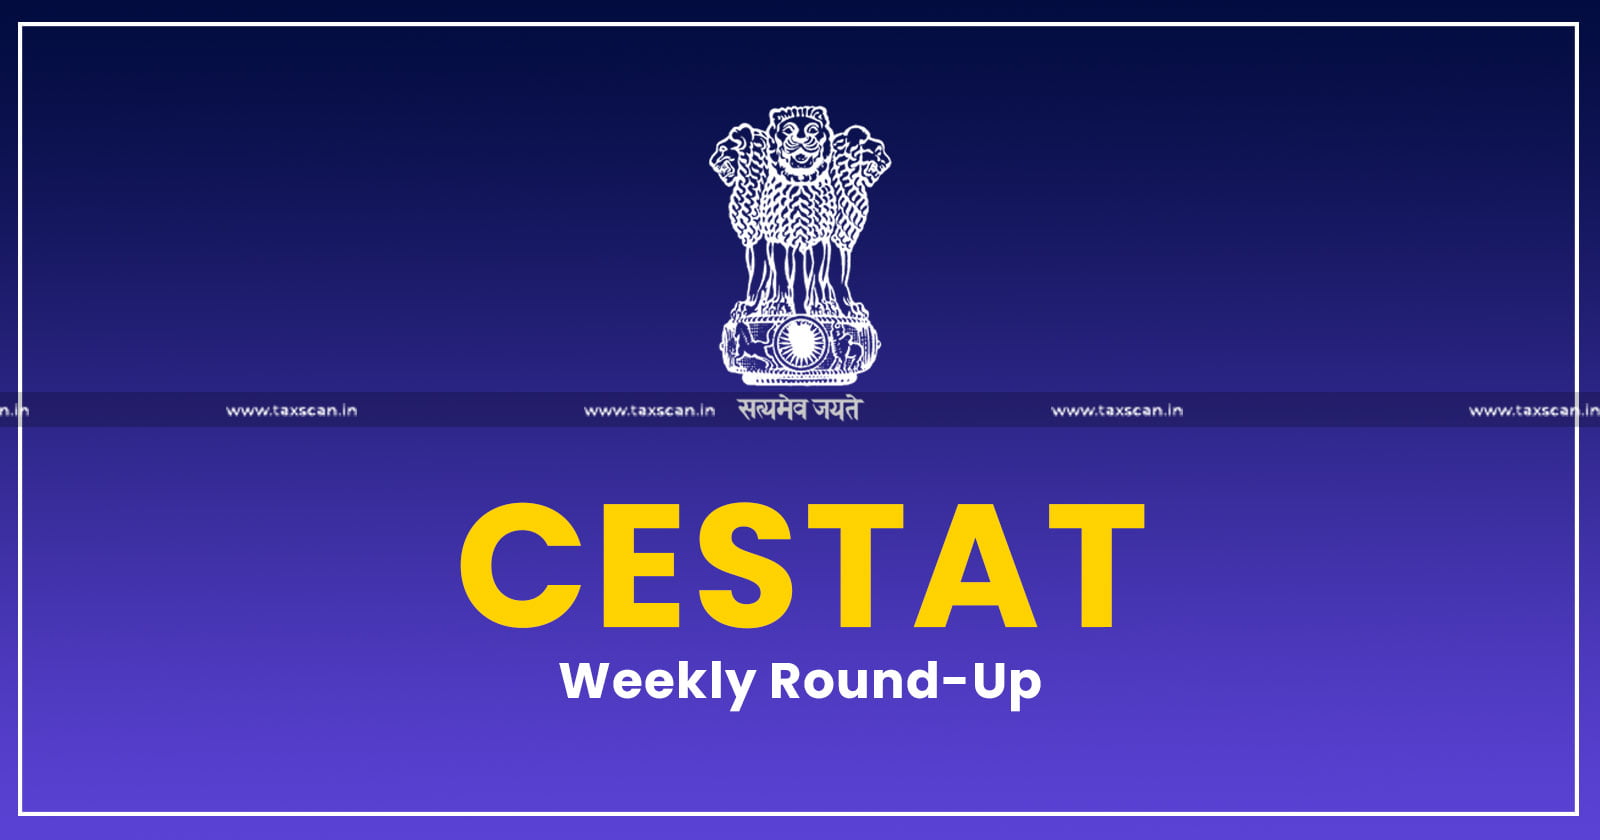 CESTAT Weekly Round Up - CESTAT Round Up Weekly - Weekly CESTAT Round Up - CESTAT - Weekly Round Up CESTAT - Taxscan